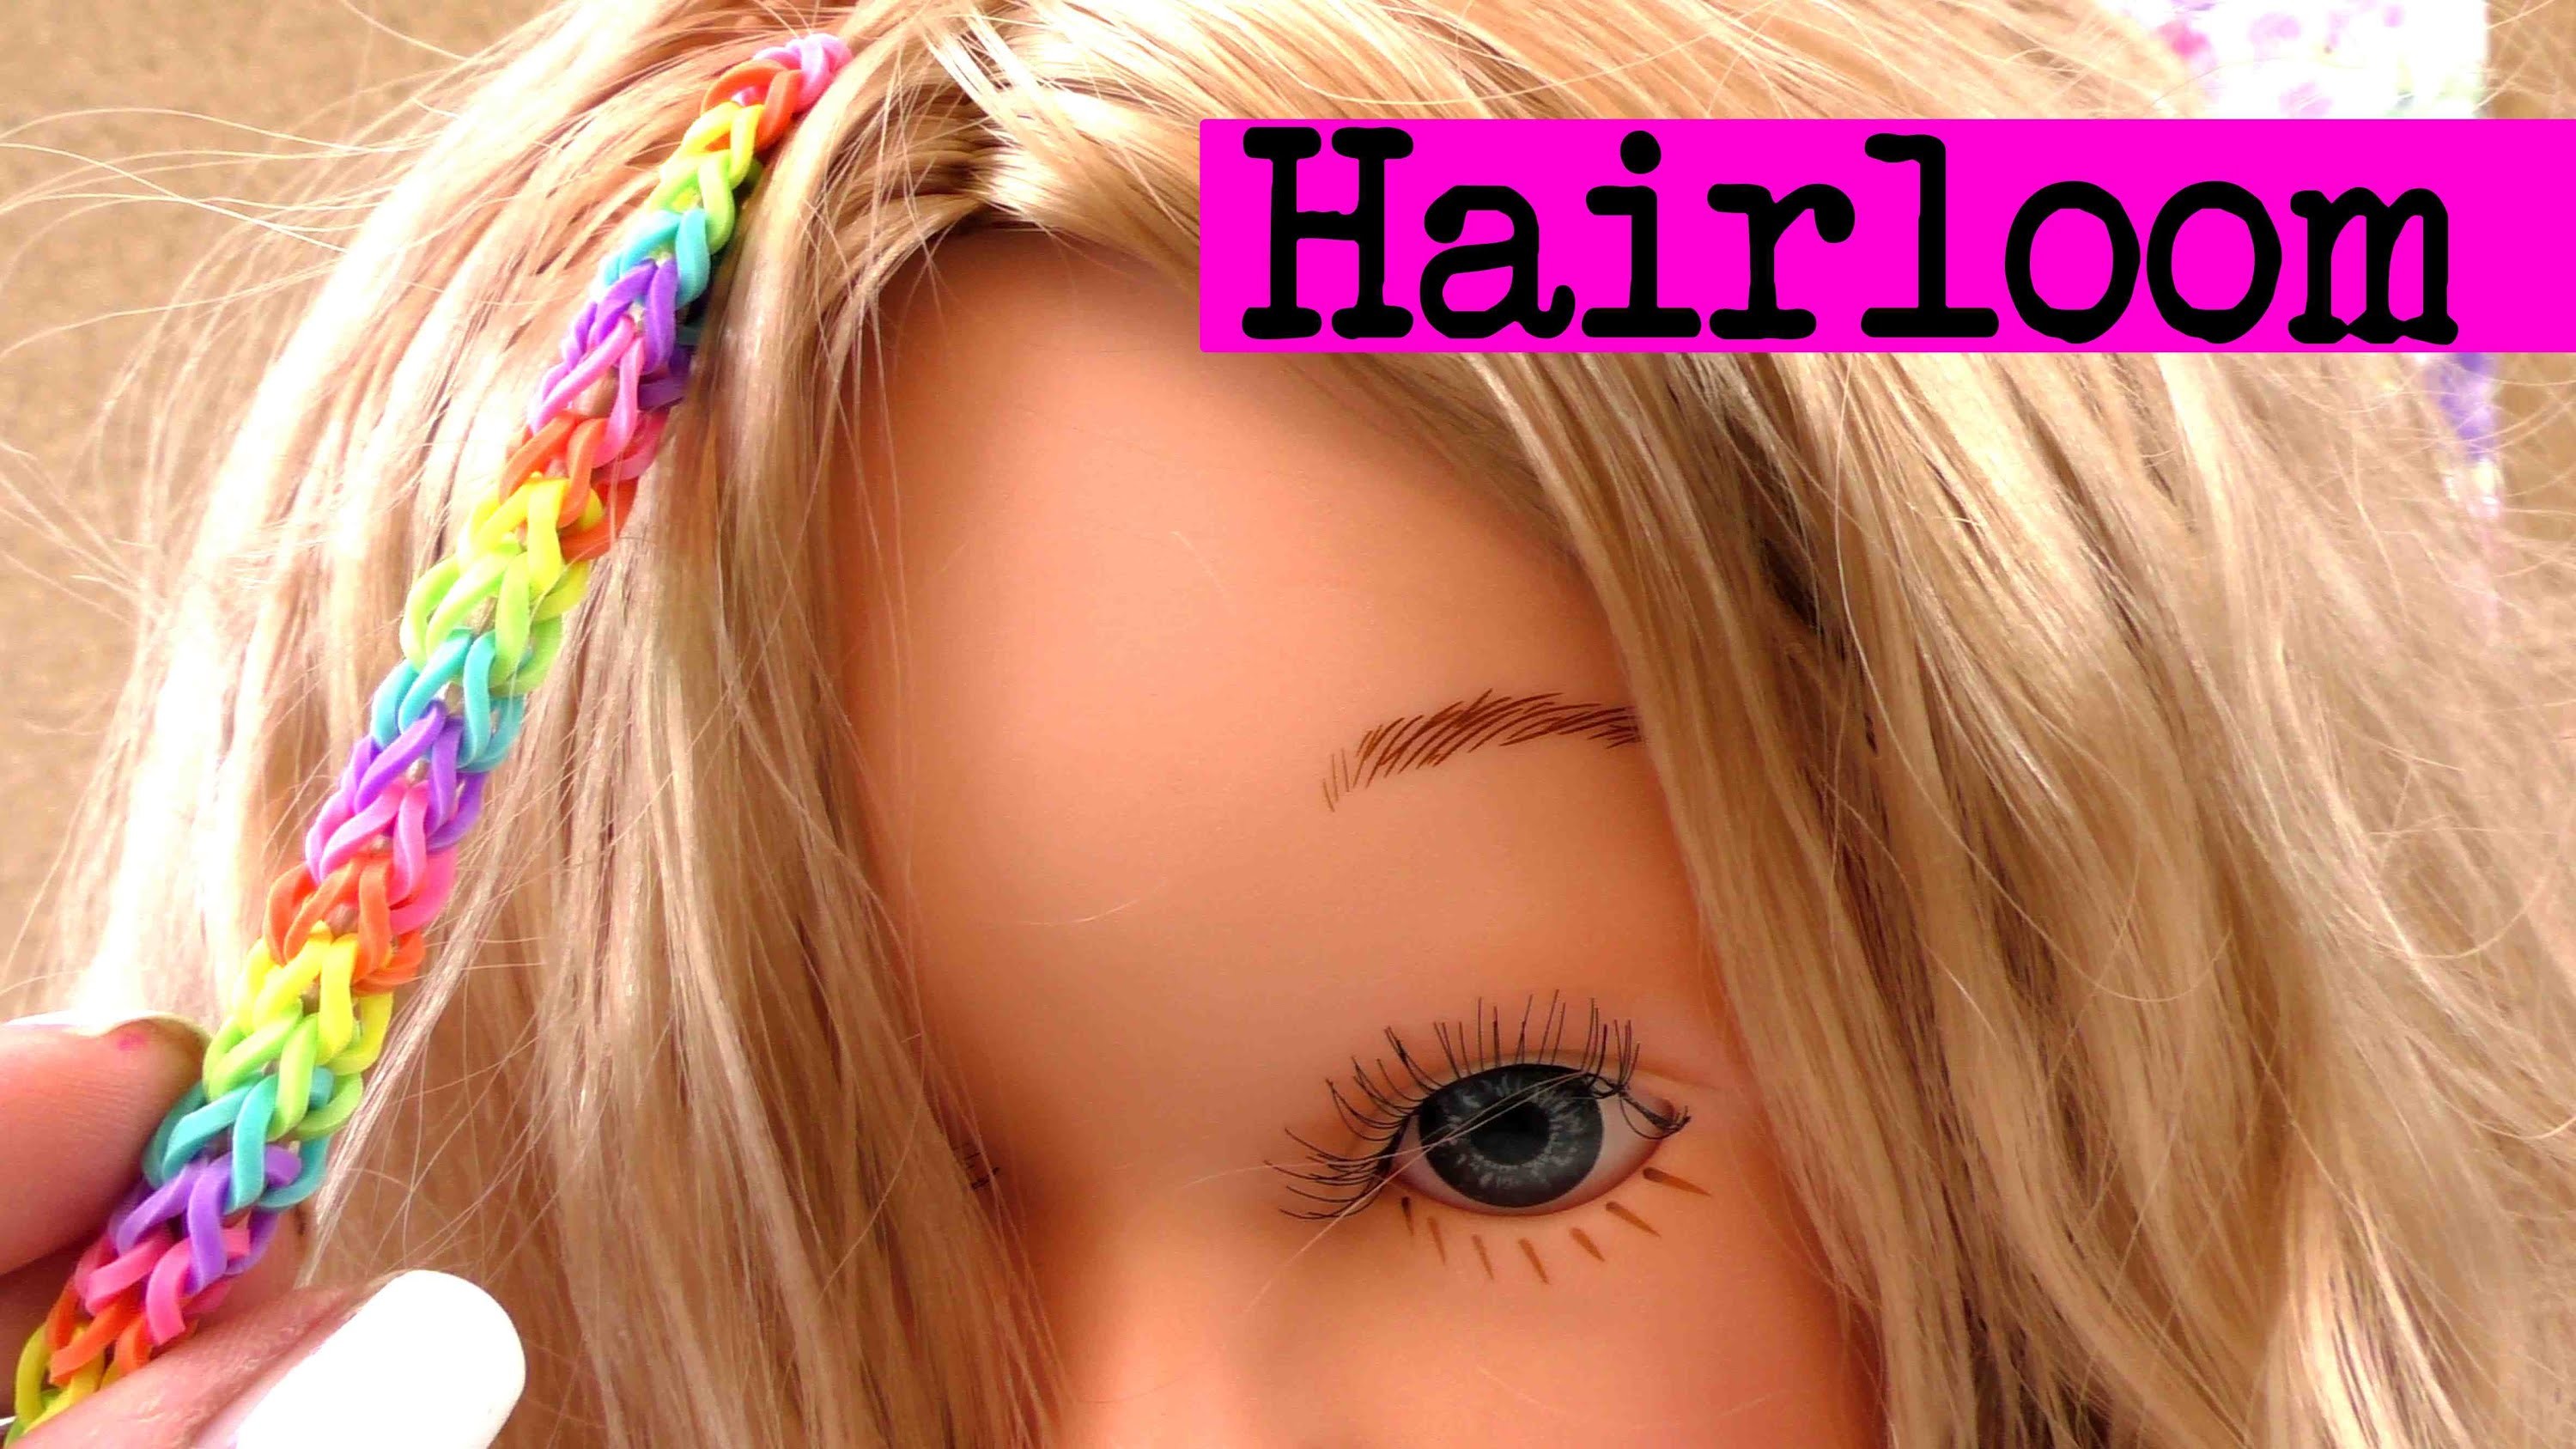 Hairloom Studio Single 3-Pin Anleitung deutsch - Rainbow Loom für die Haare Tutorial